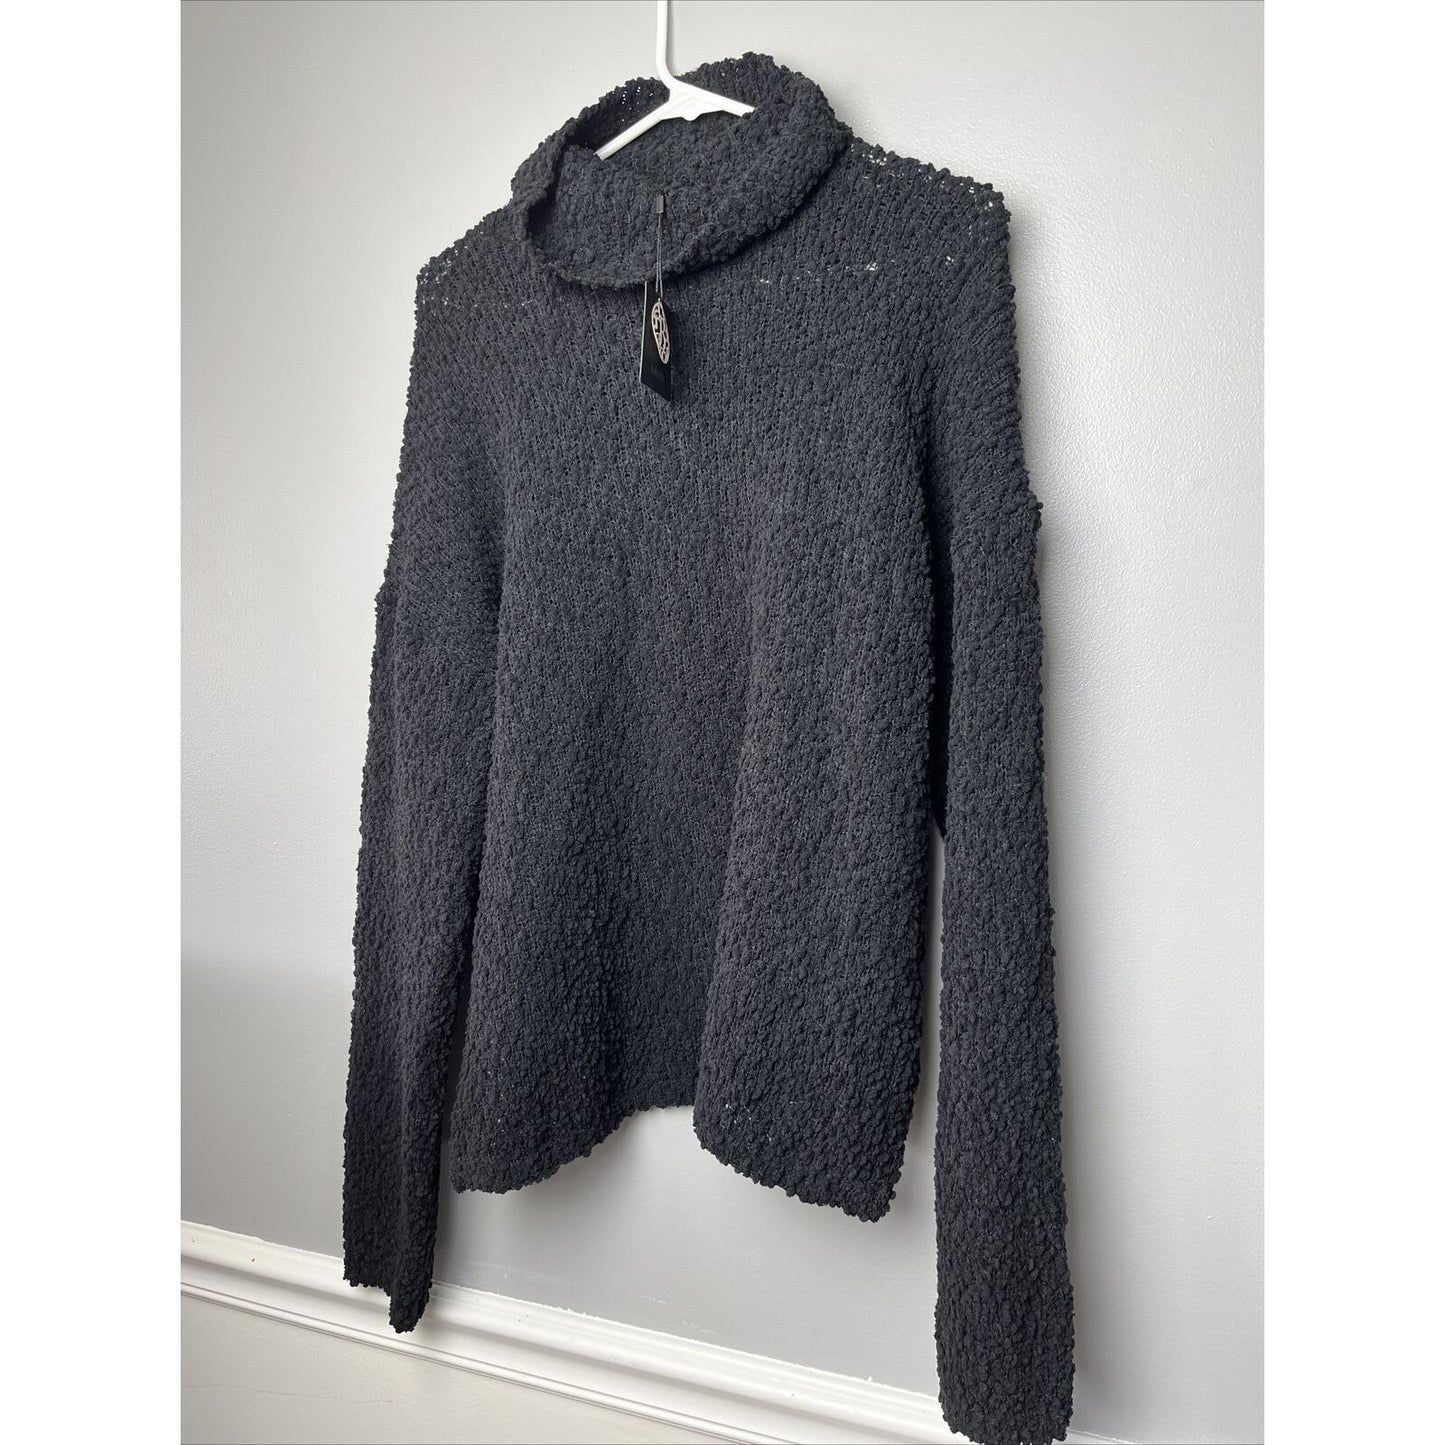 Bobeau Women’s Popcorn Knit Turtleneck Sweater Pullover Black Large NWT